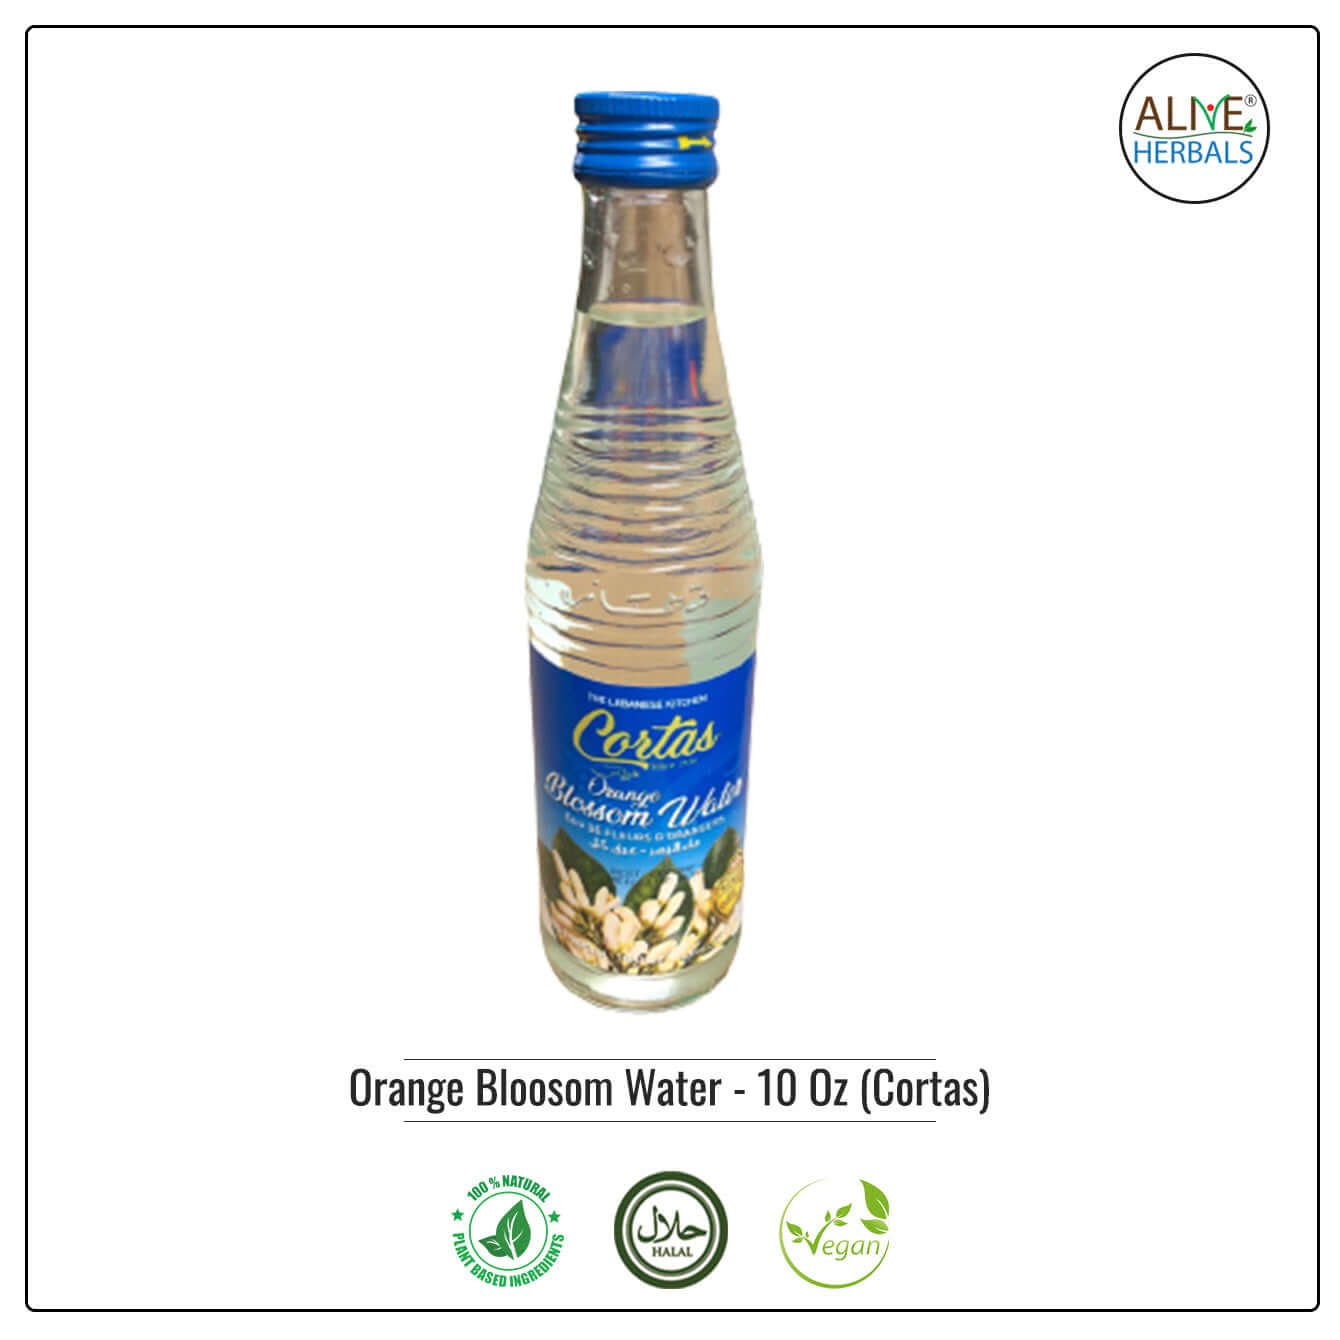 Orange Blossom Water - Buy at Natural Food Store | Alive Herbals.